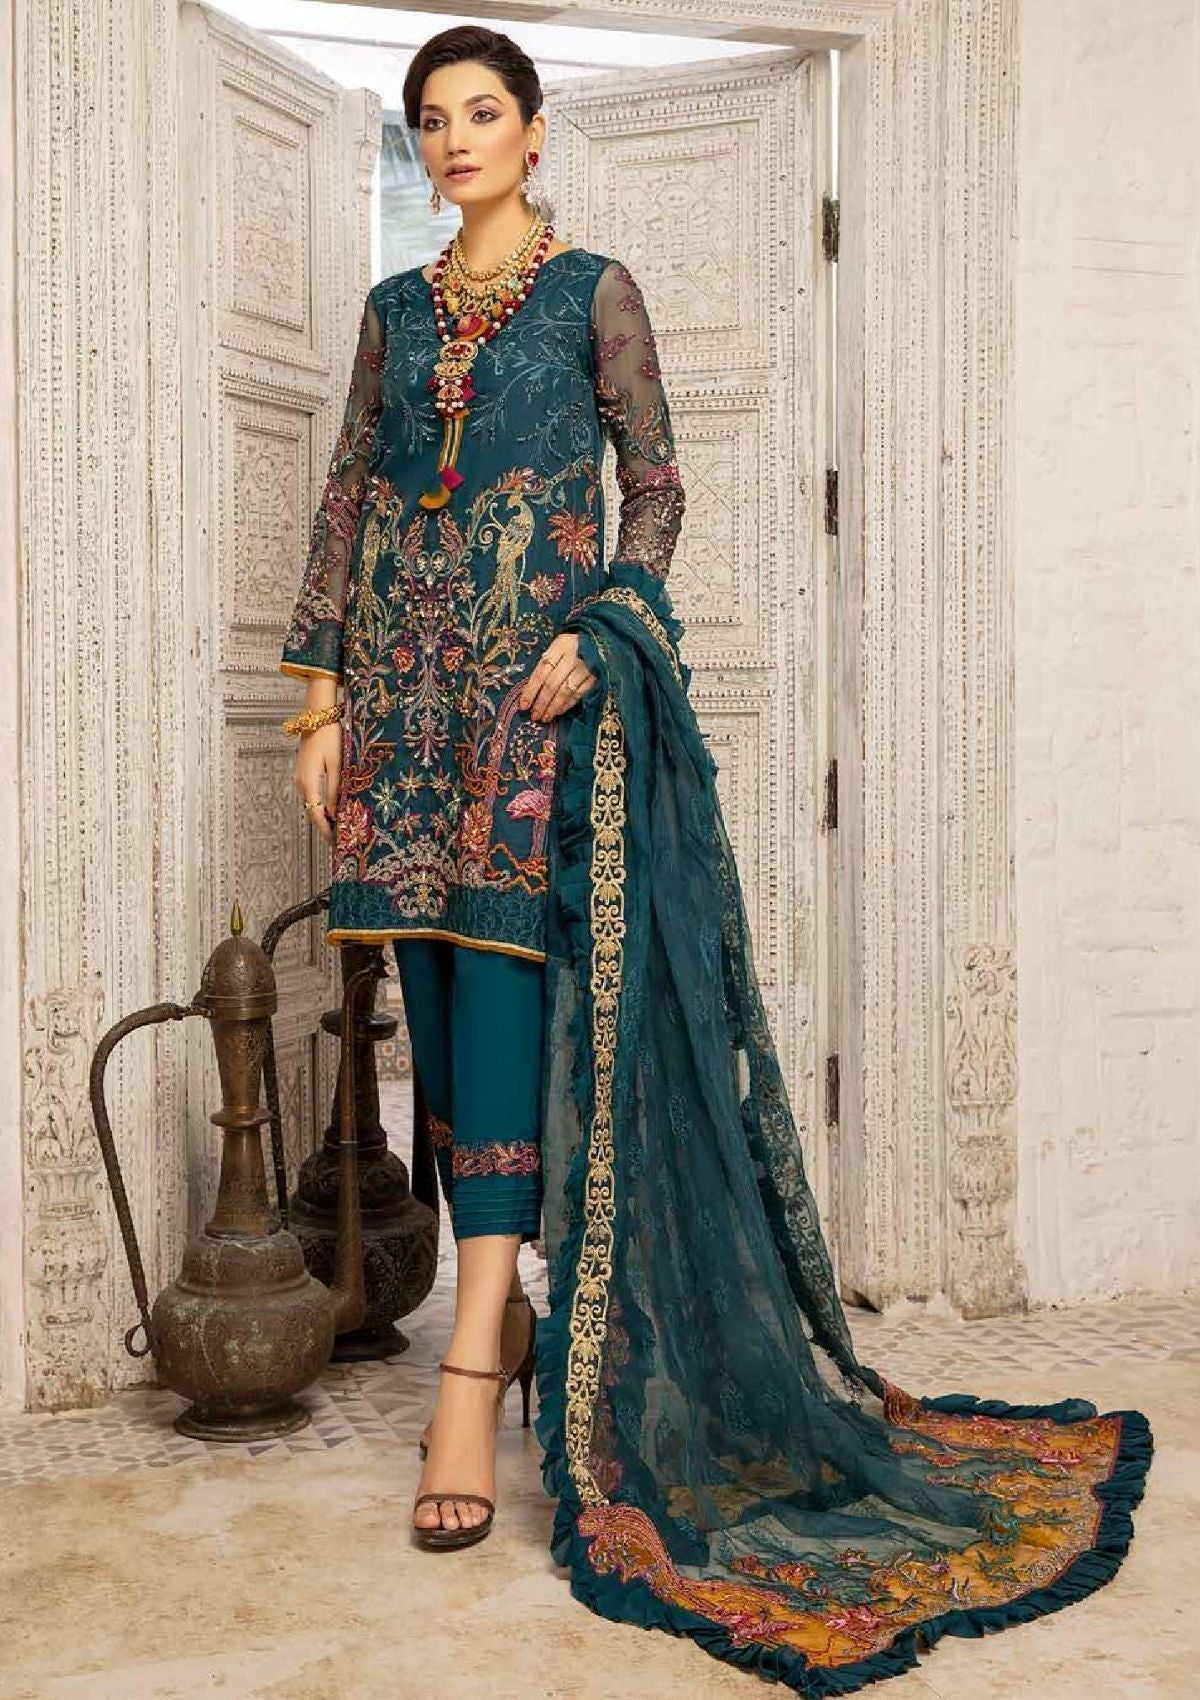 Formal dress - Charizma - Dastan-e-Jashan - DJW#12 available at Saleem Fabrics Traditions